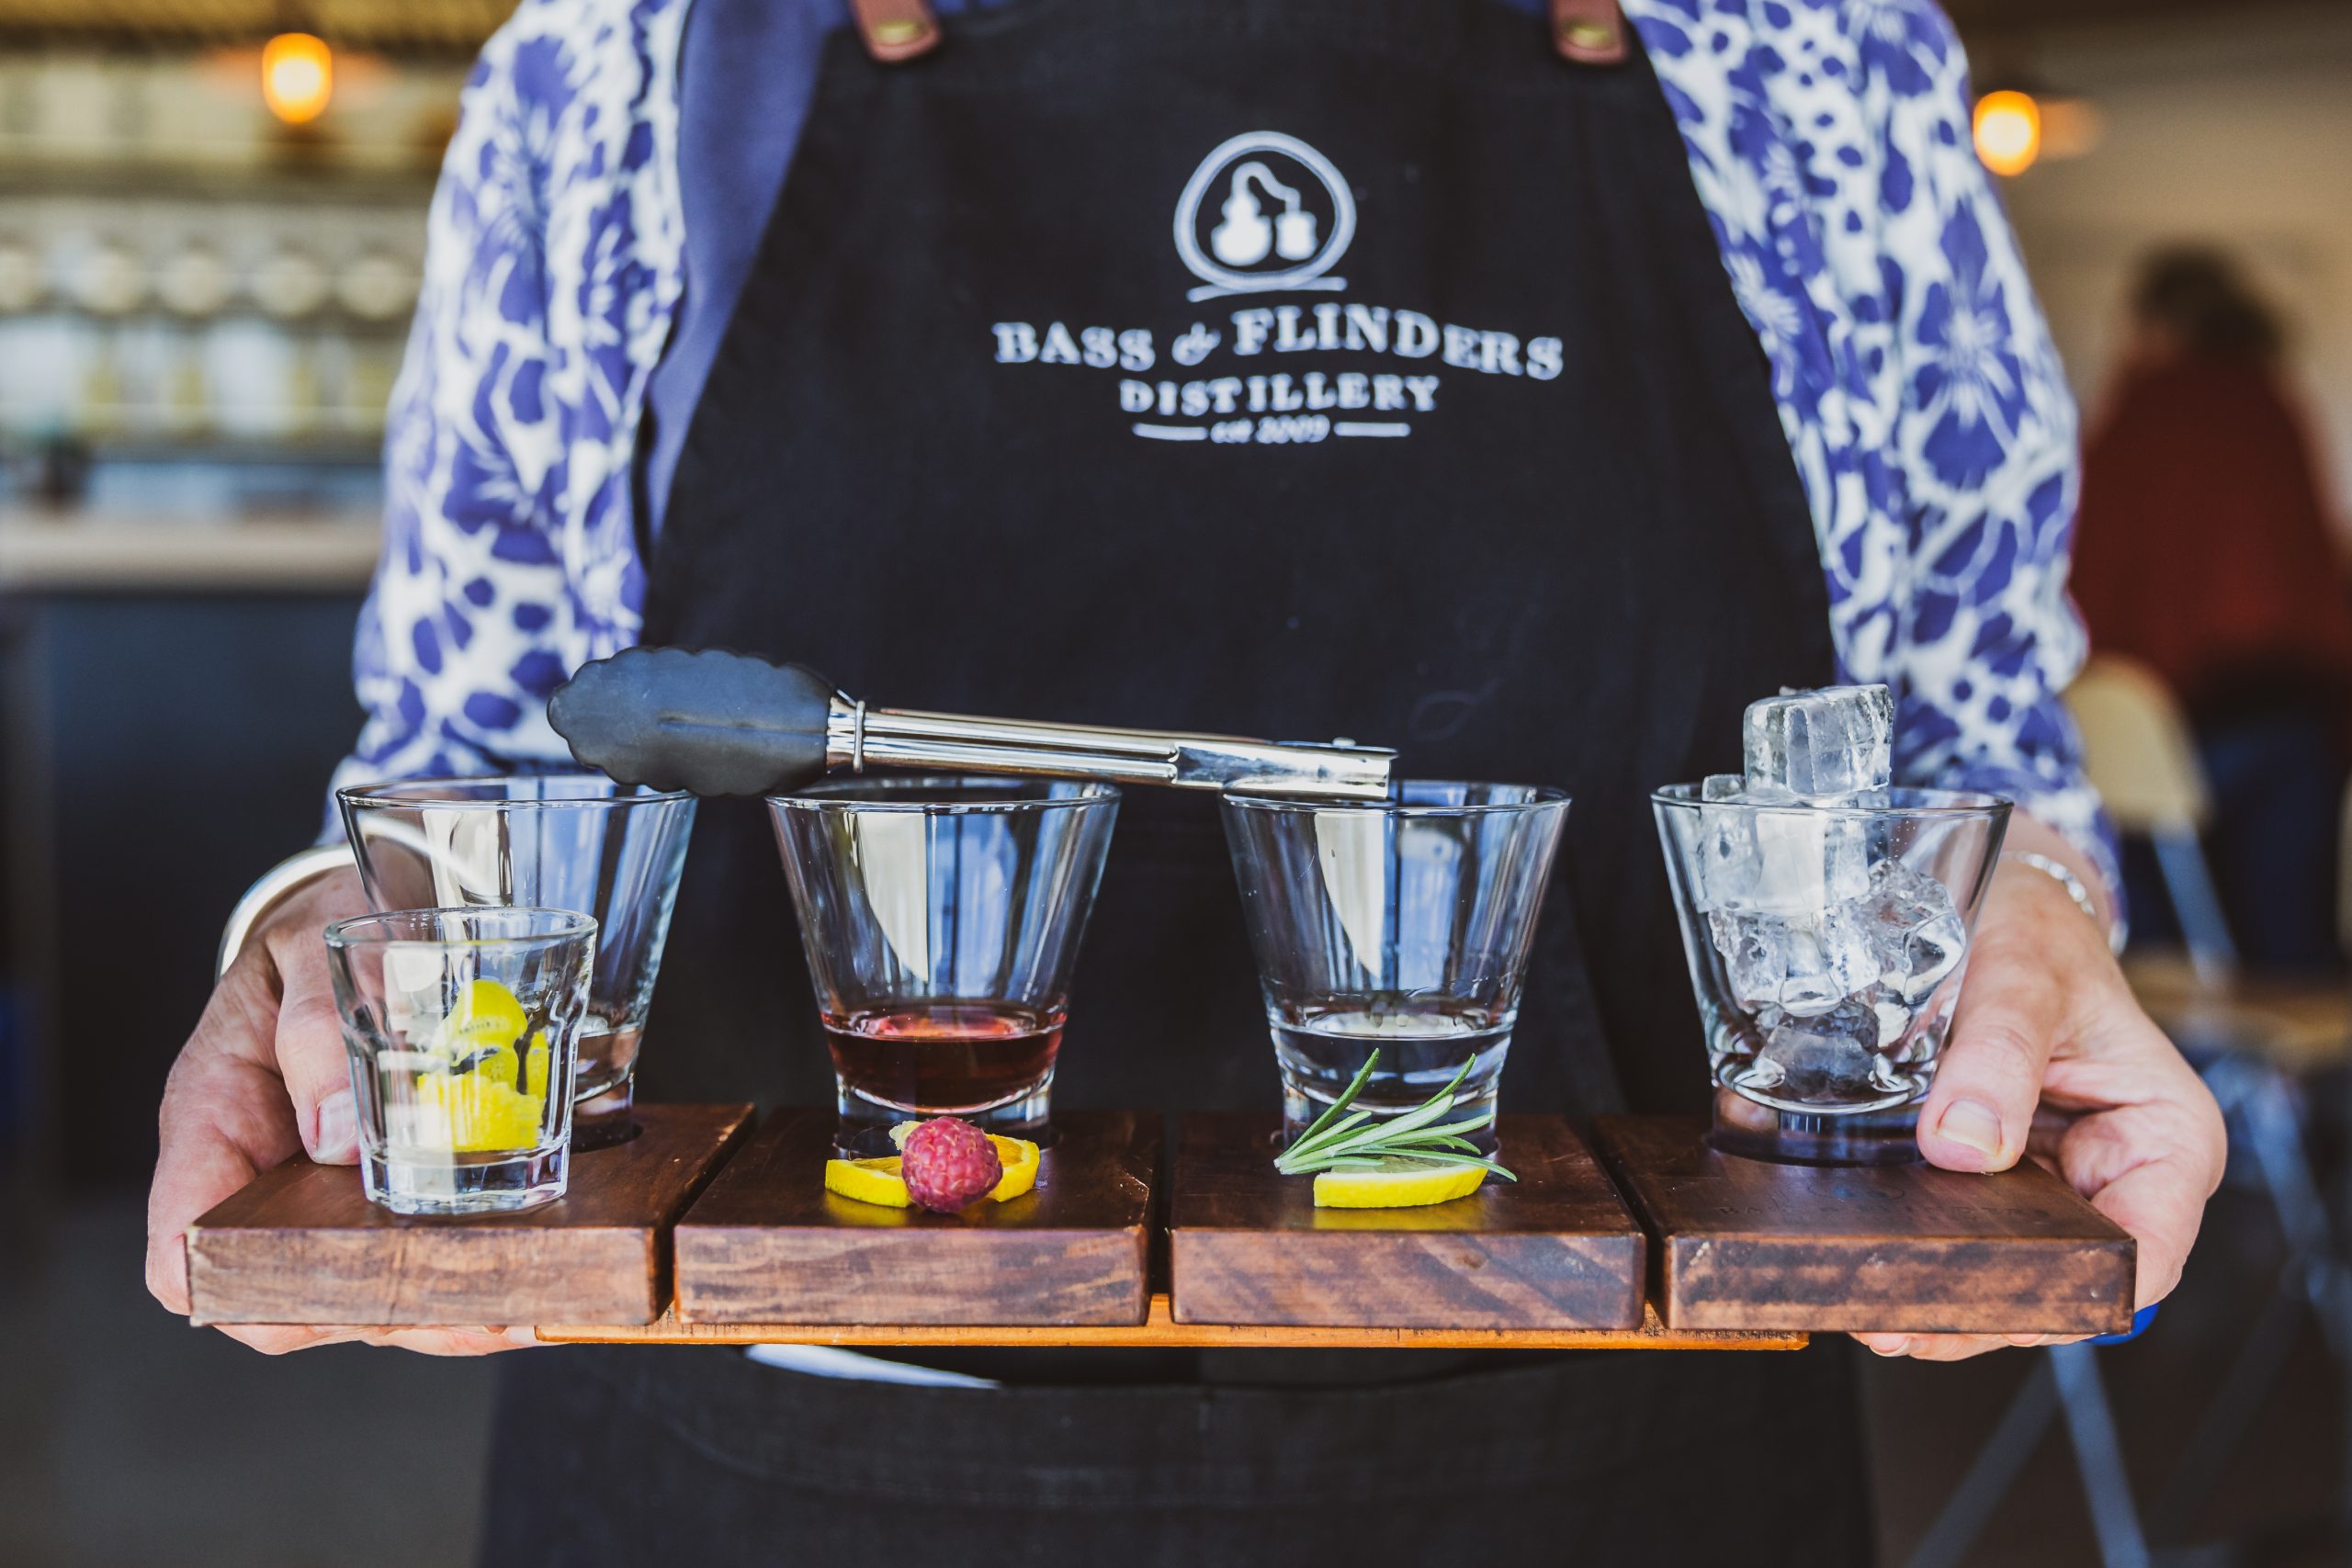 Bass & Flinders Distillery